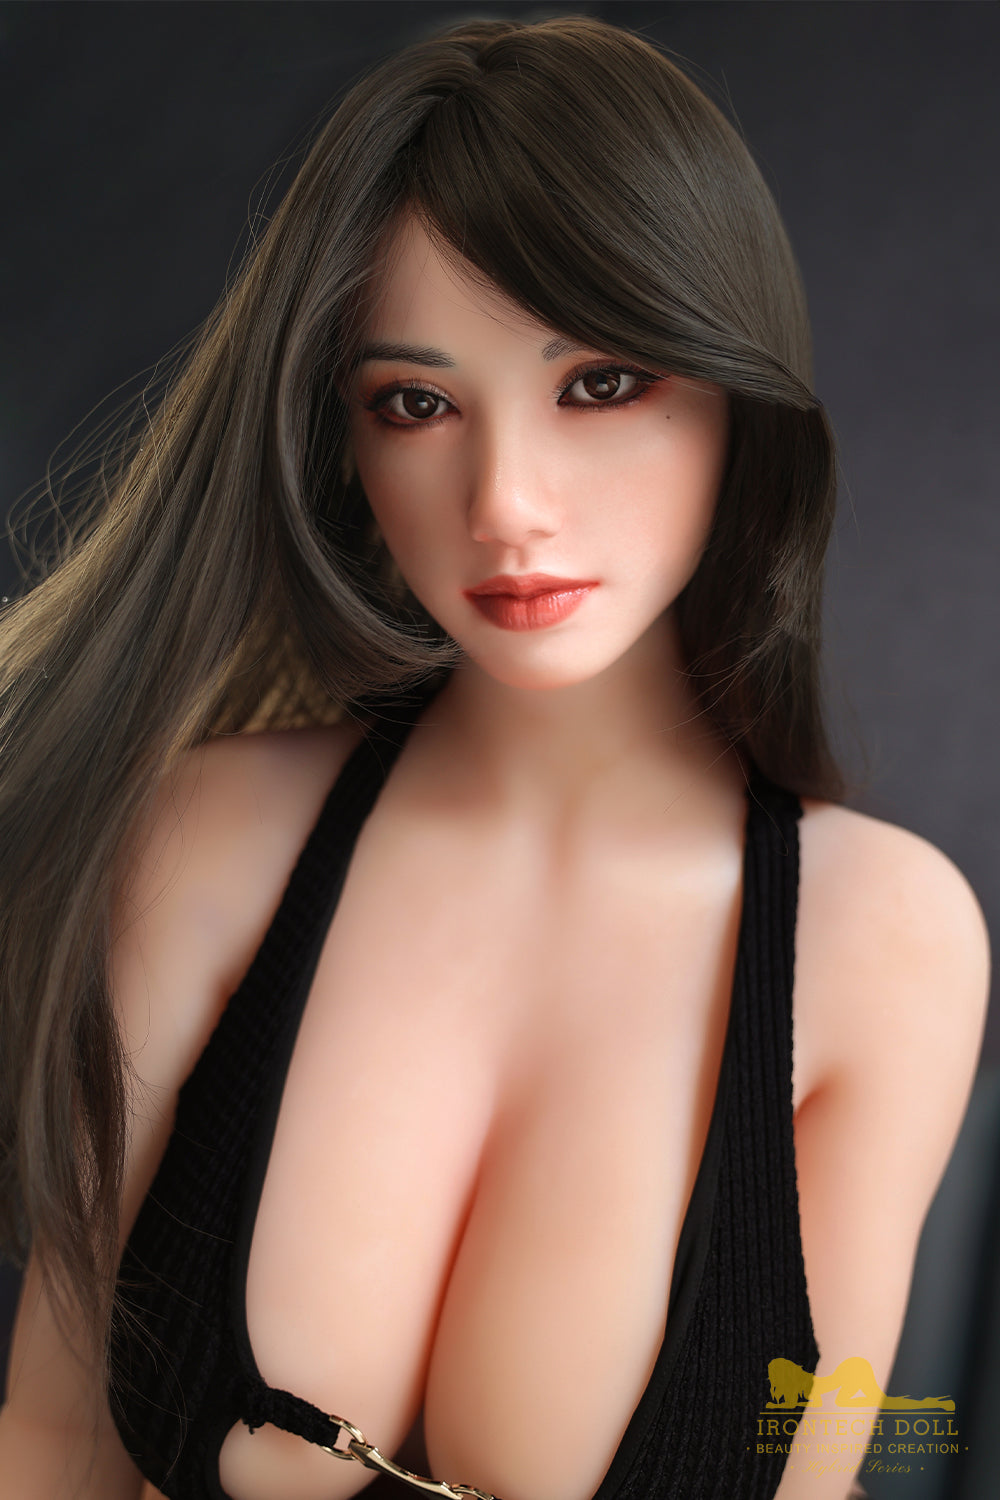 Irontech Doll 161 cm Fusion - Rita | Buy Sex Dolls at DOLLS ACTUALLY